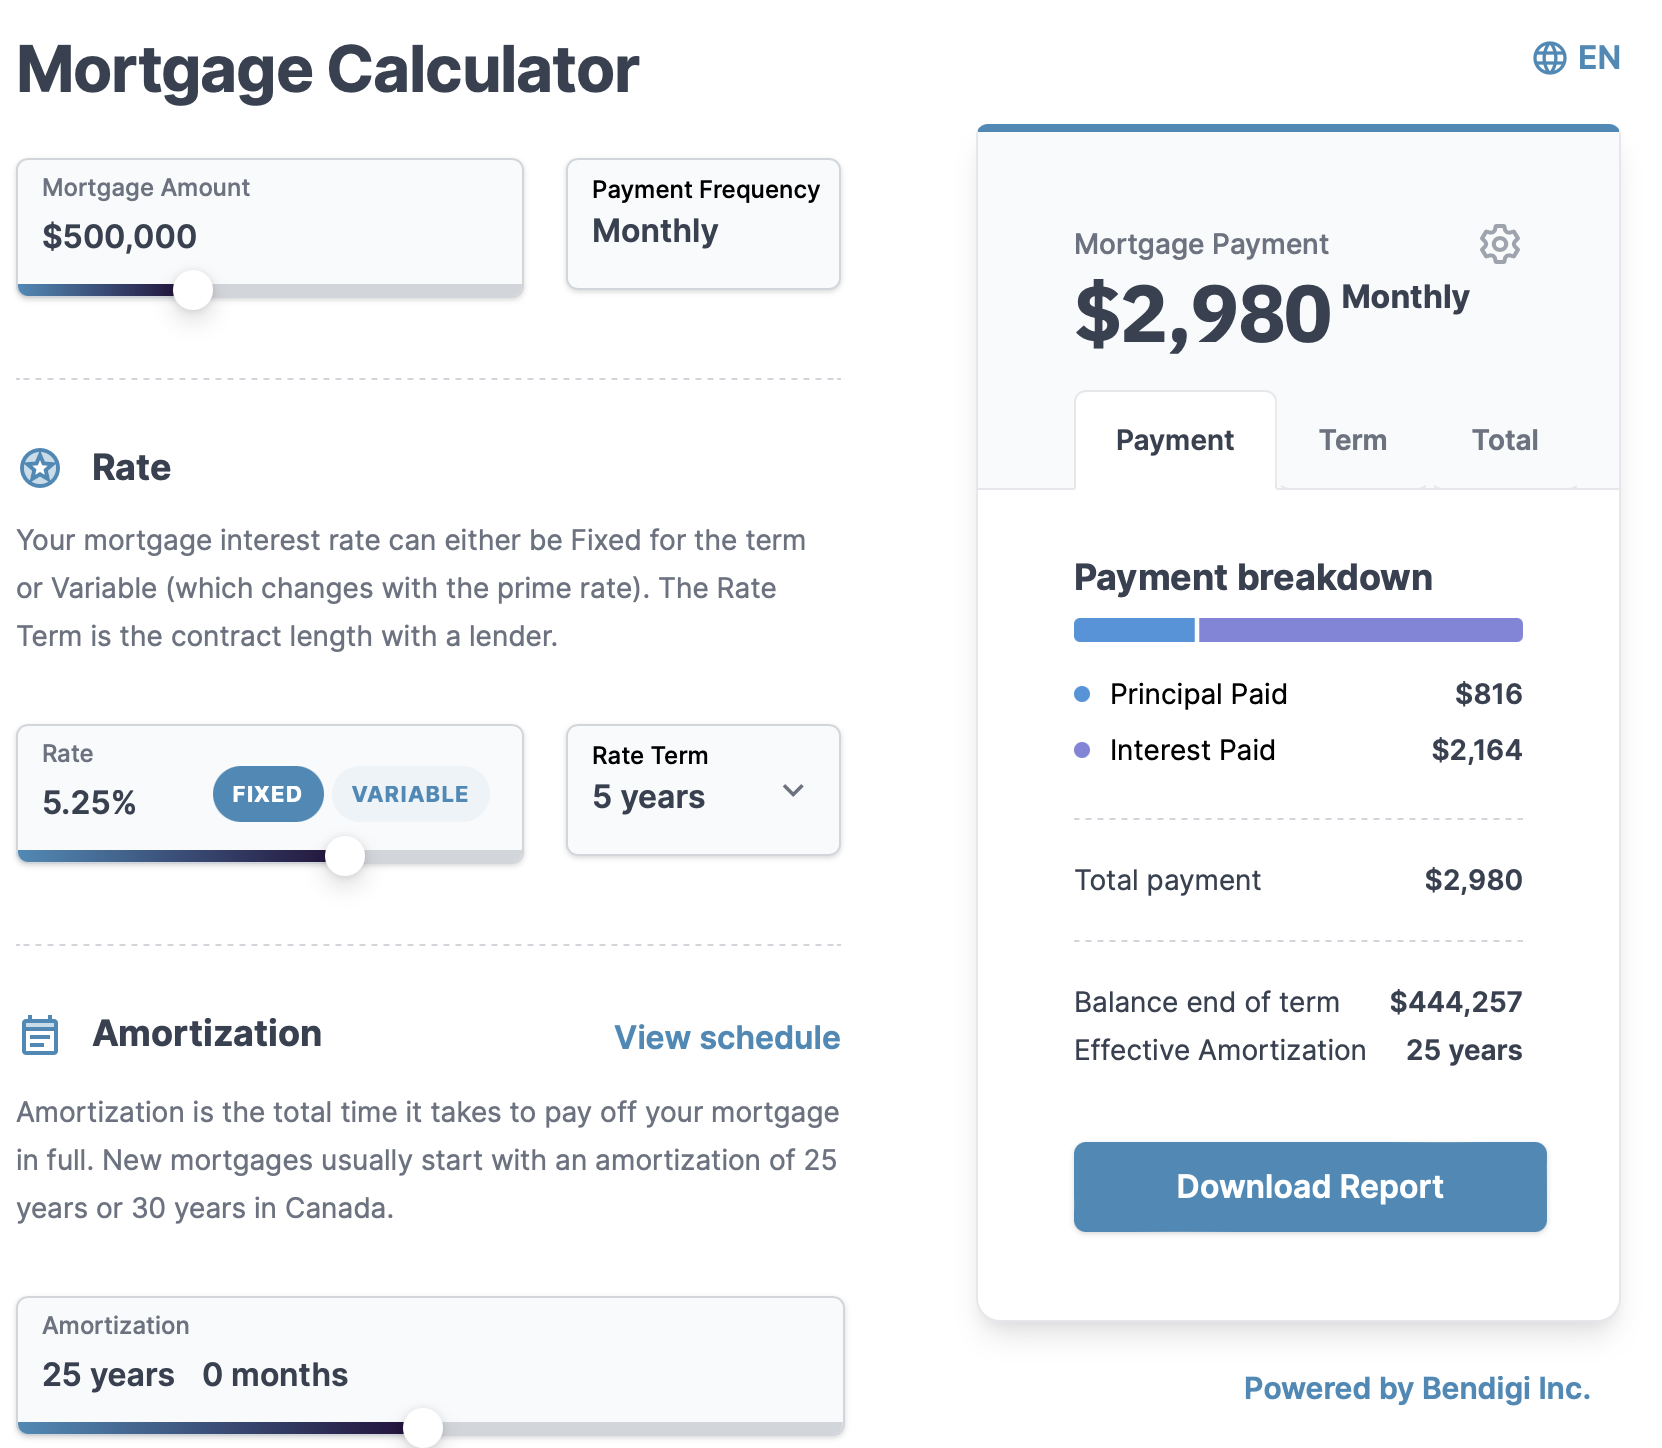 New Desktop Mortgage Calculator!